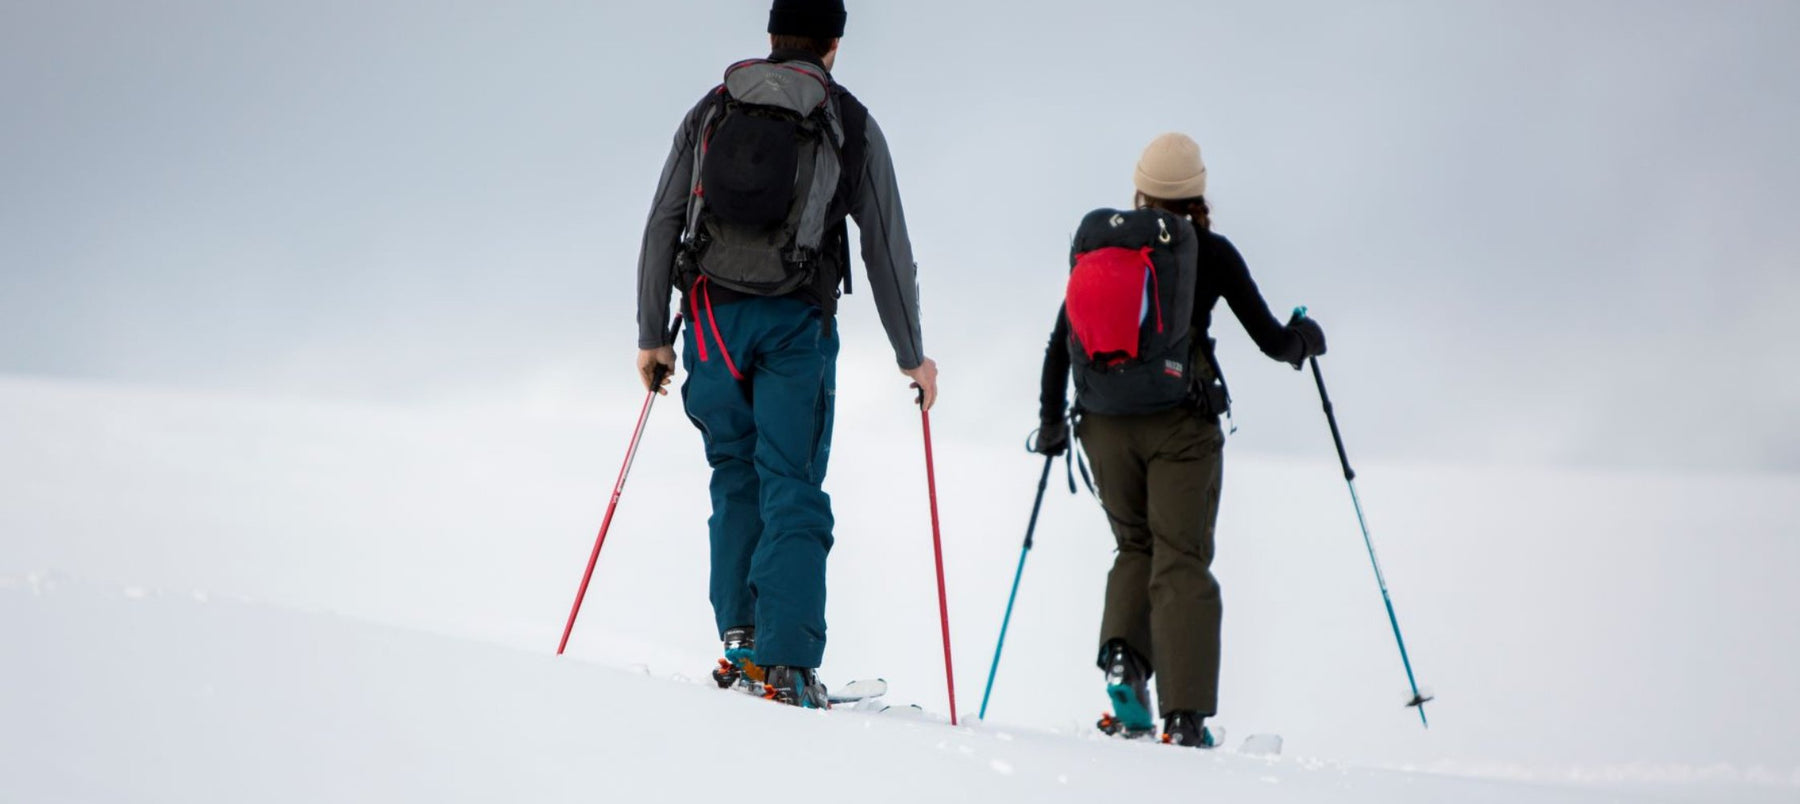 two people ski touring holding poles